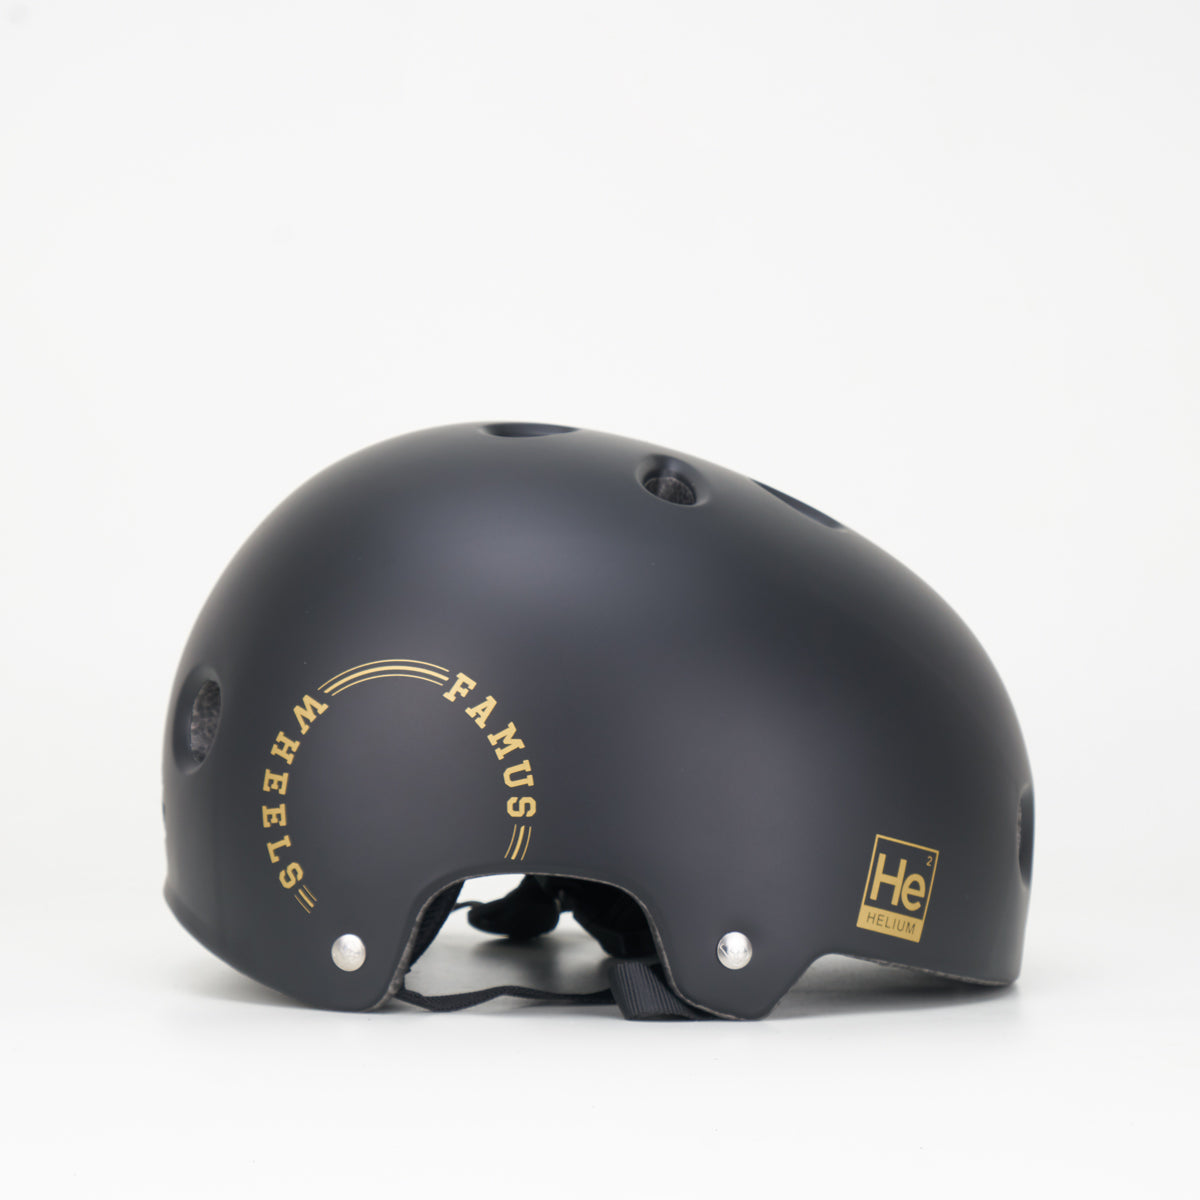 ALK13 x Famus Helium Helmet - Black Gold